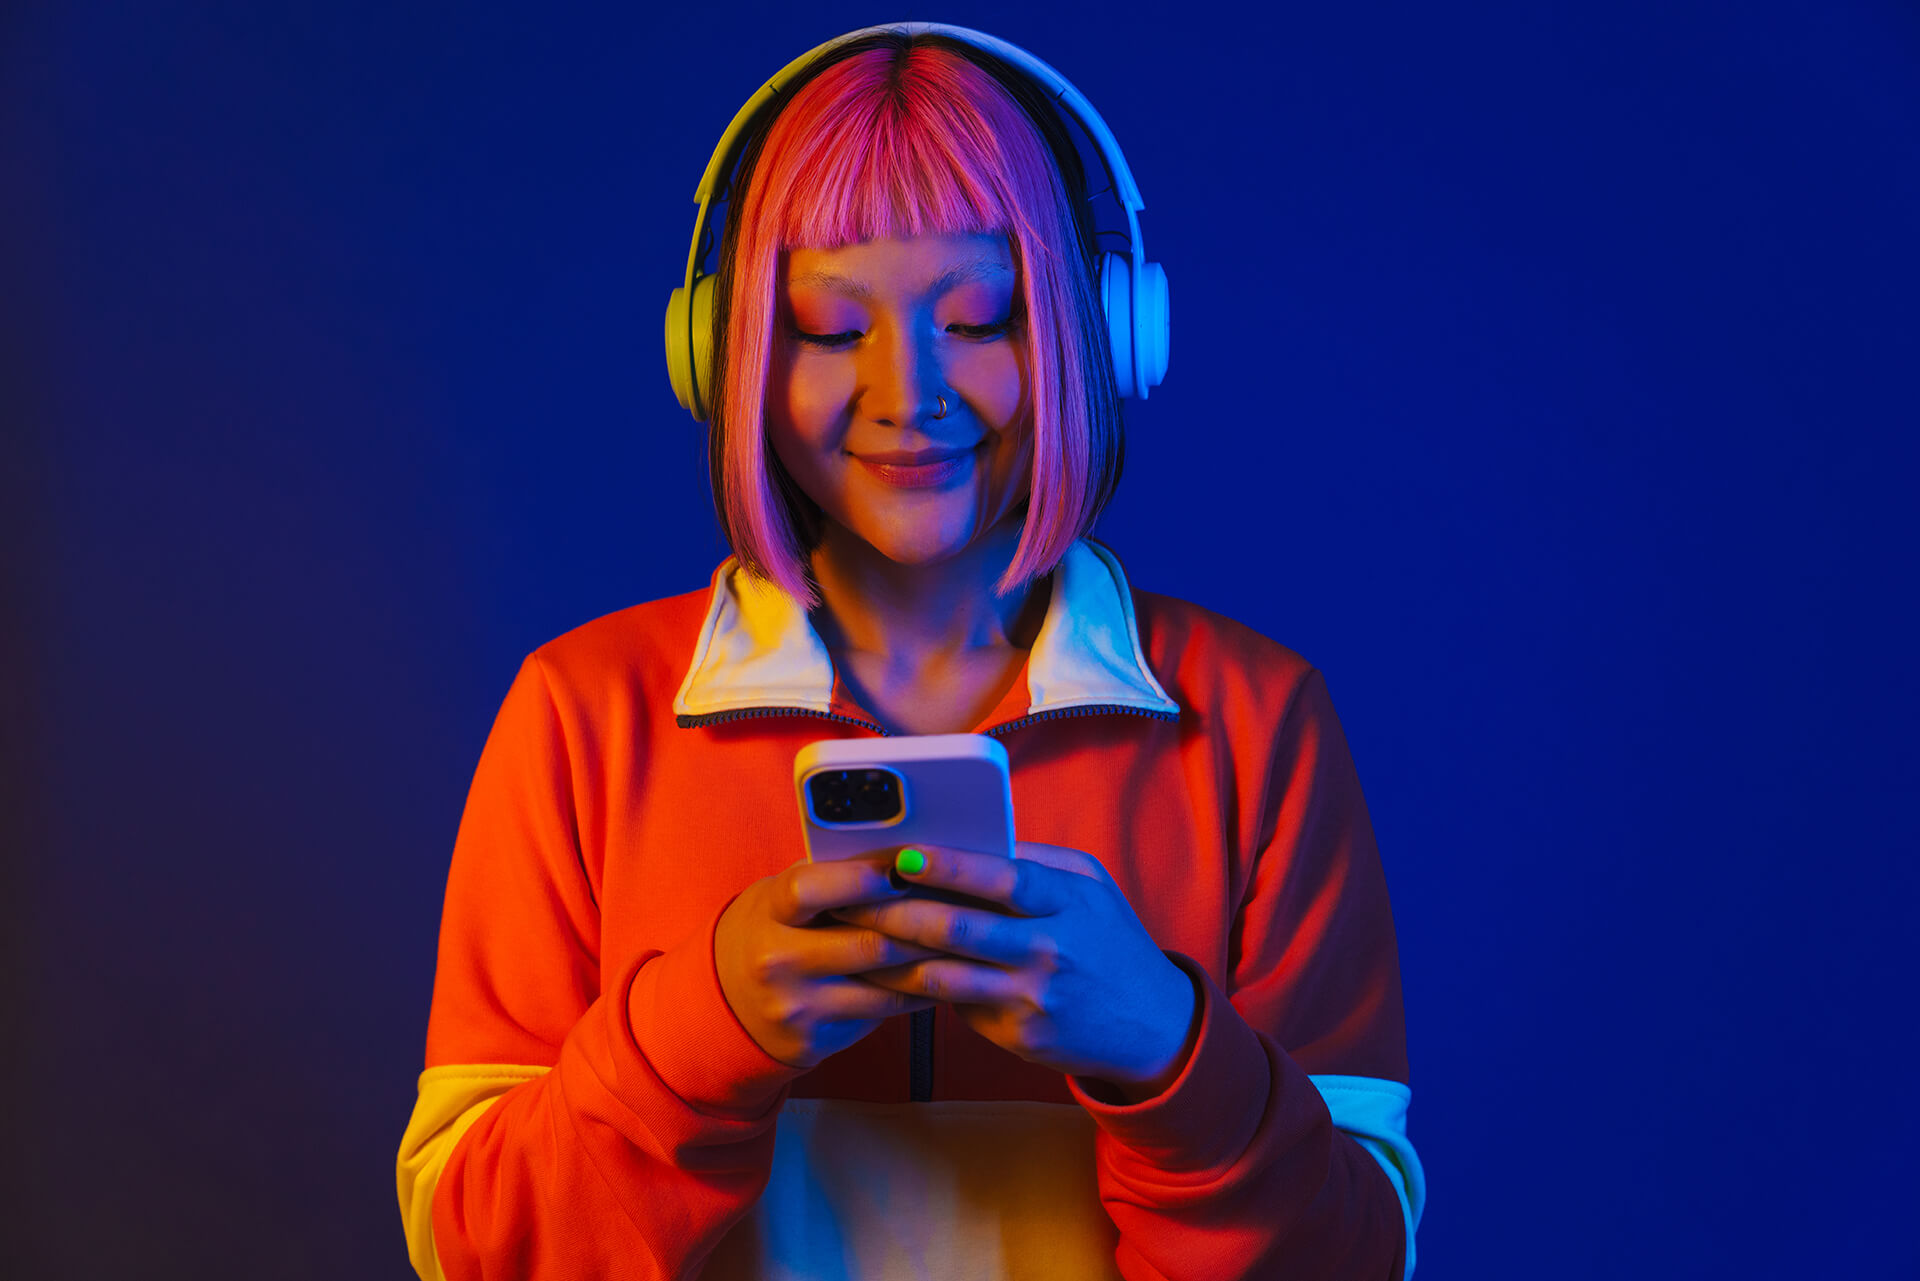 asian-girl-in-headphones-smiling-and-using-mobile-2022-12-01-22-52-14-utc